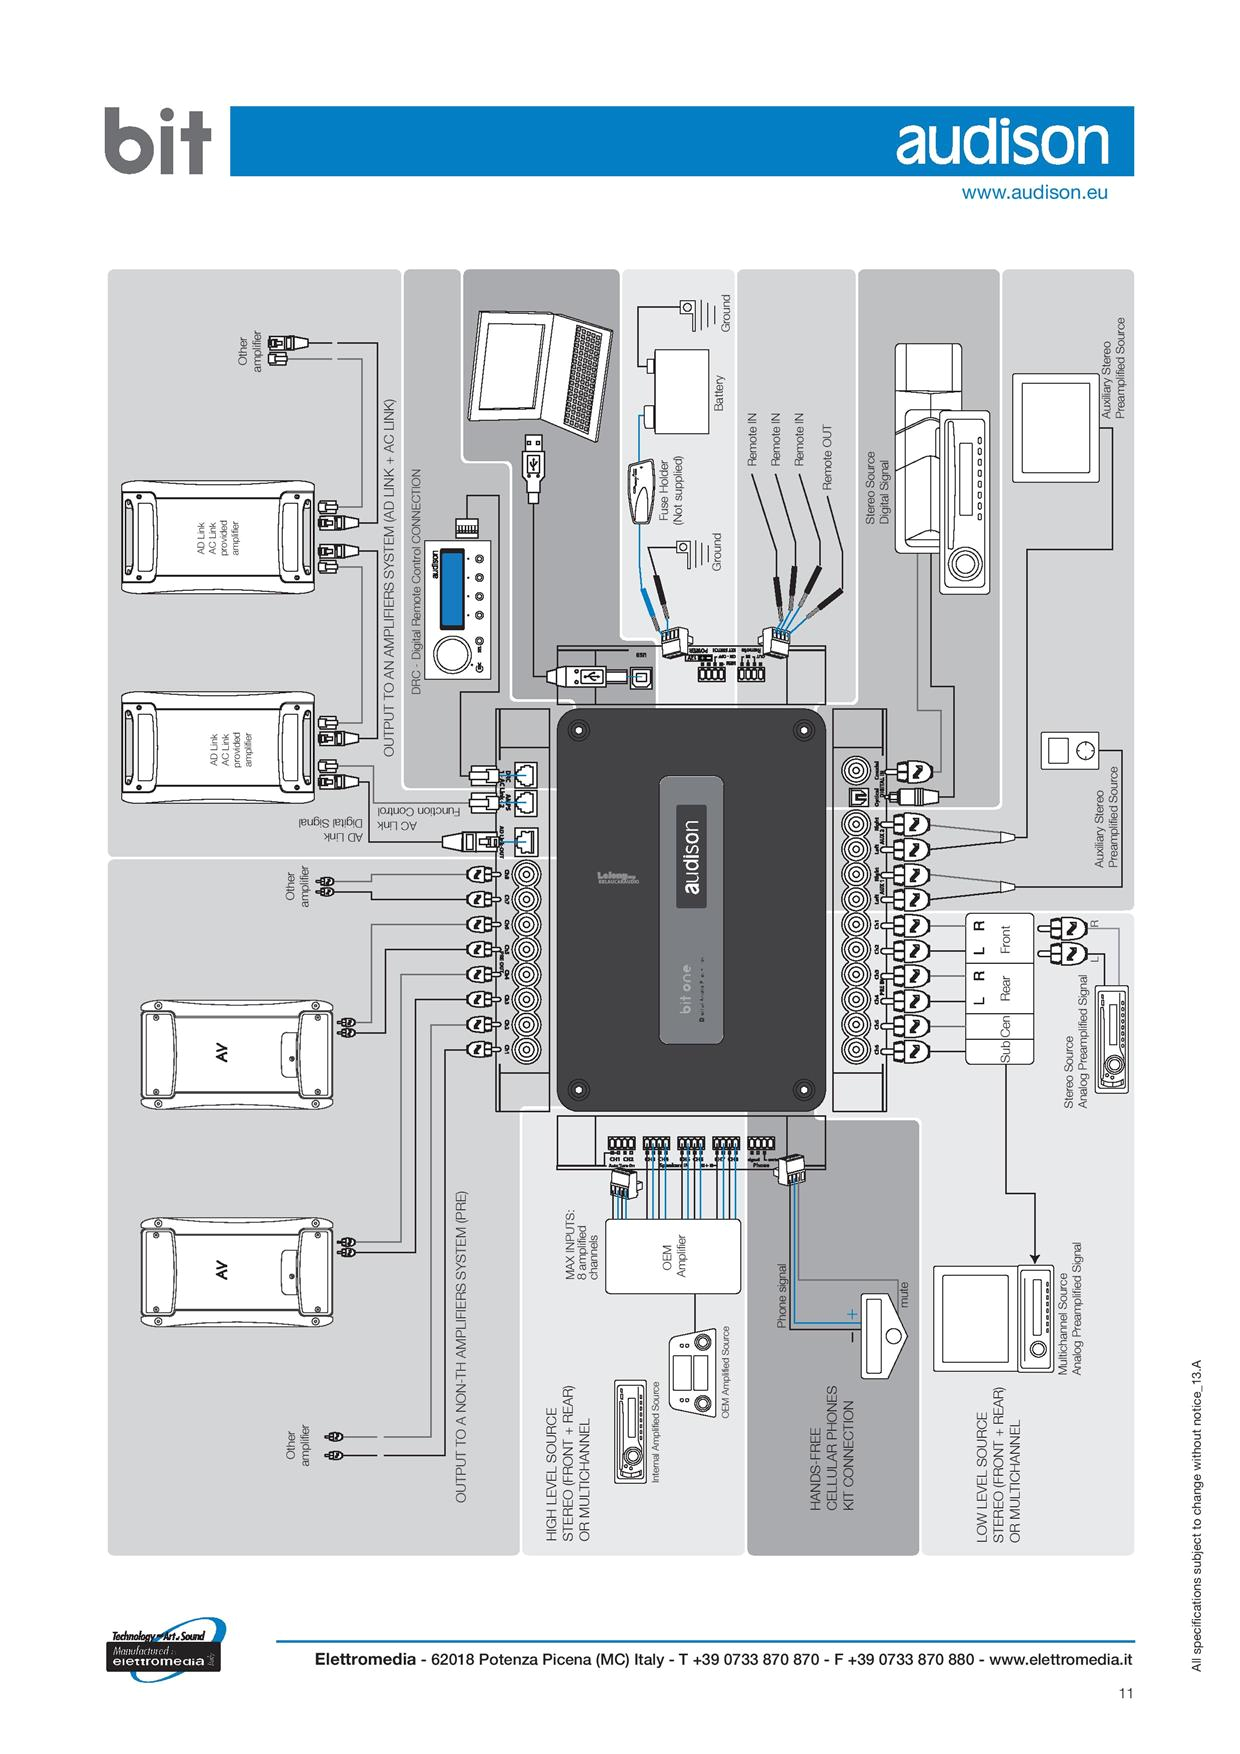 digital signal wiring diagram basic electronics wiring diagram jpg